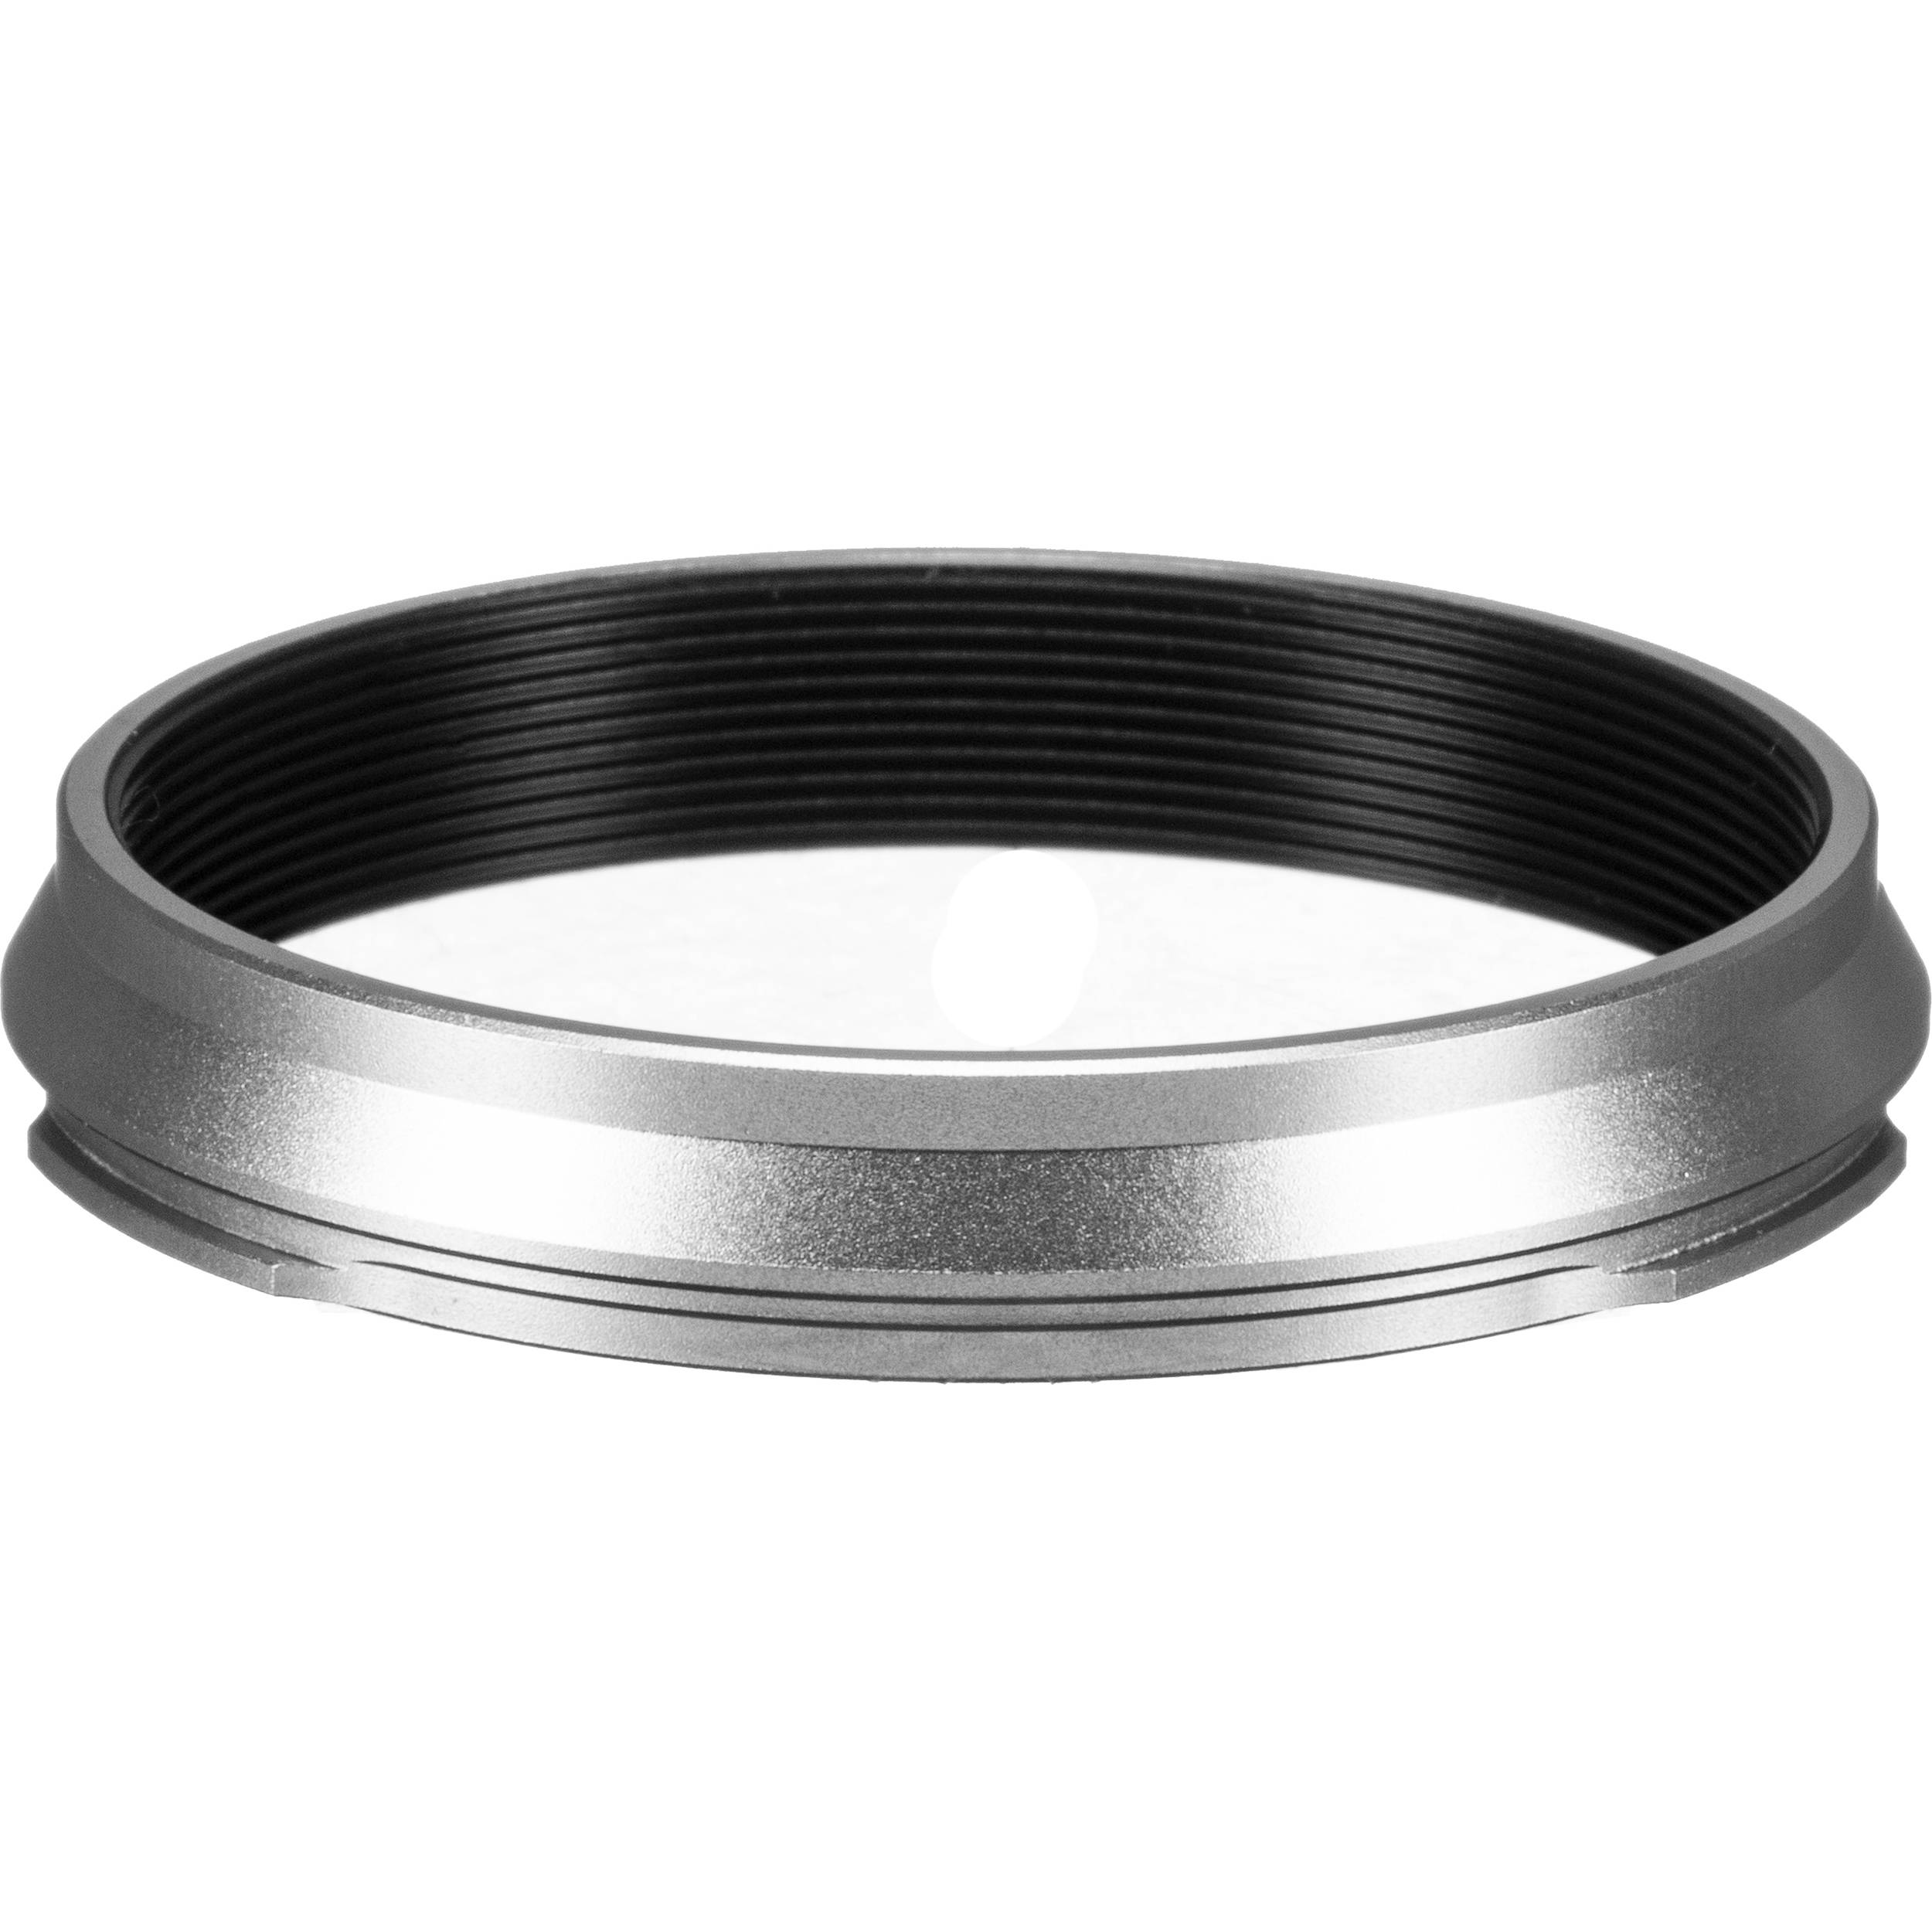 Fujifilm x100 Hood + Adapter Ring ARX100 - Silver